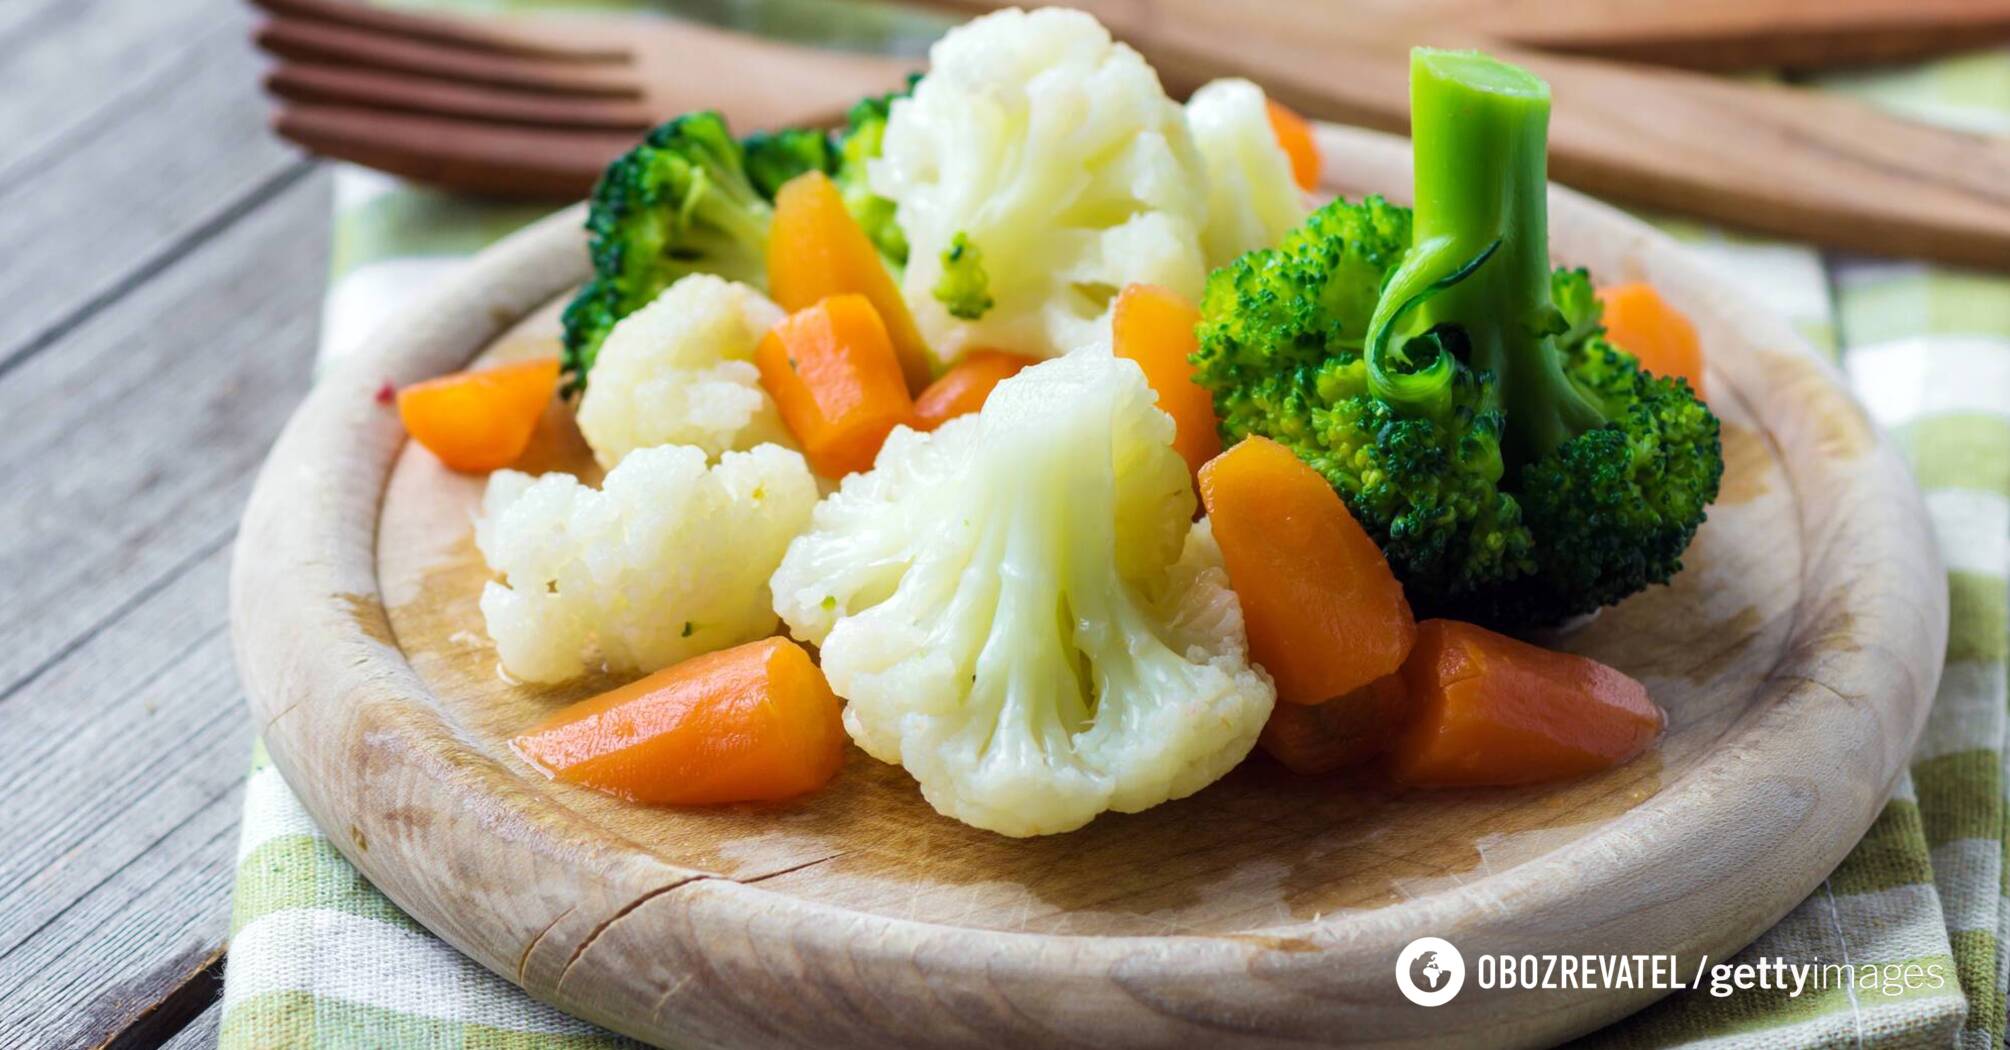 Steamed vegetables retain more vitamins